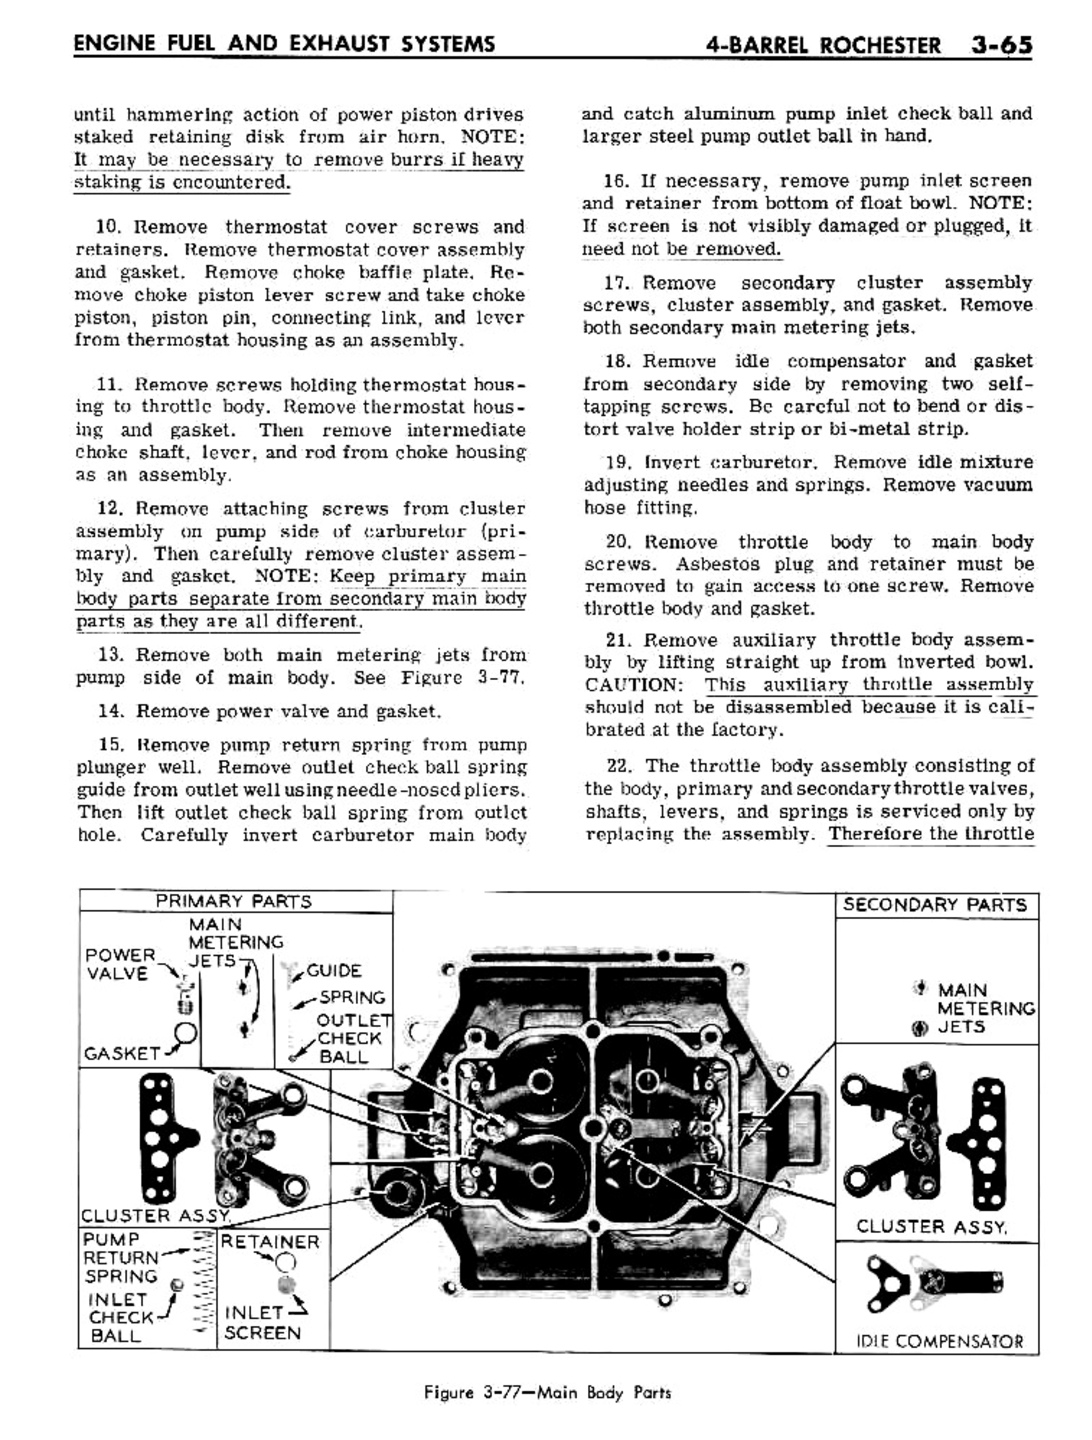 n_04 1961 Buick Shop Manual - Engine Fuel & Exhaust-065-065.jpg